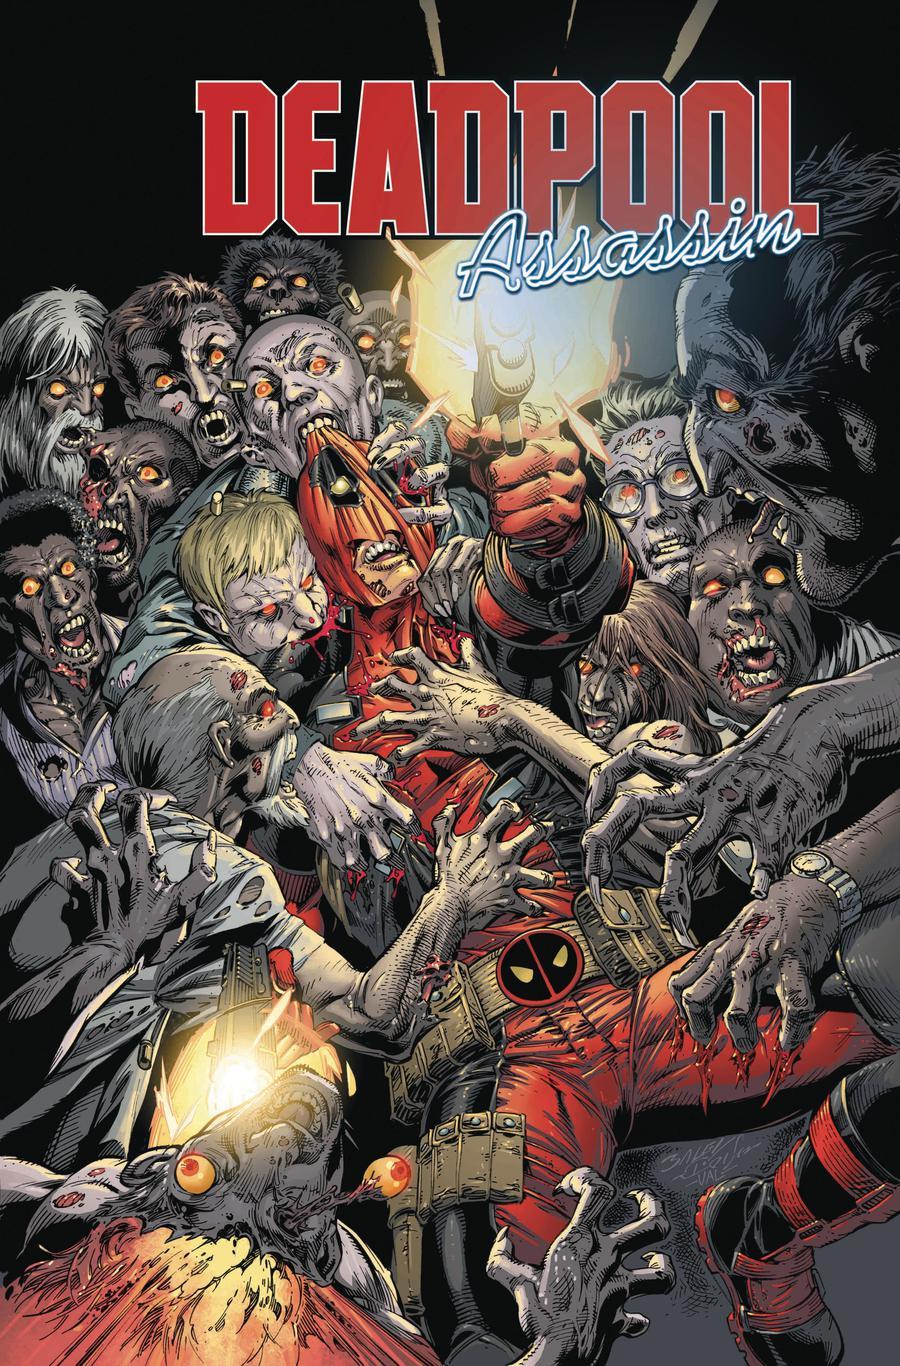 Deadpool Assassin Vol. 1 #4